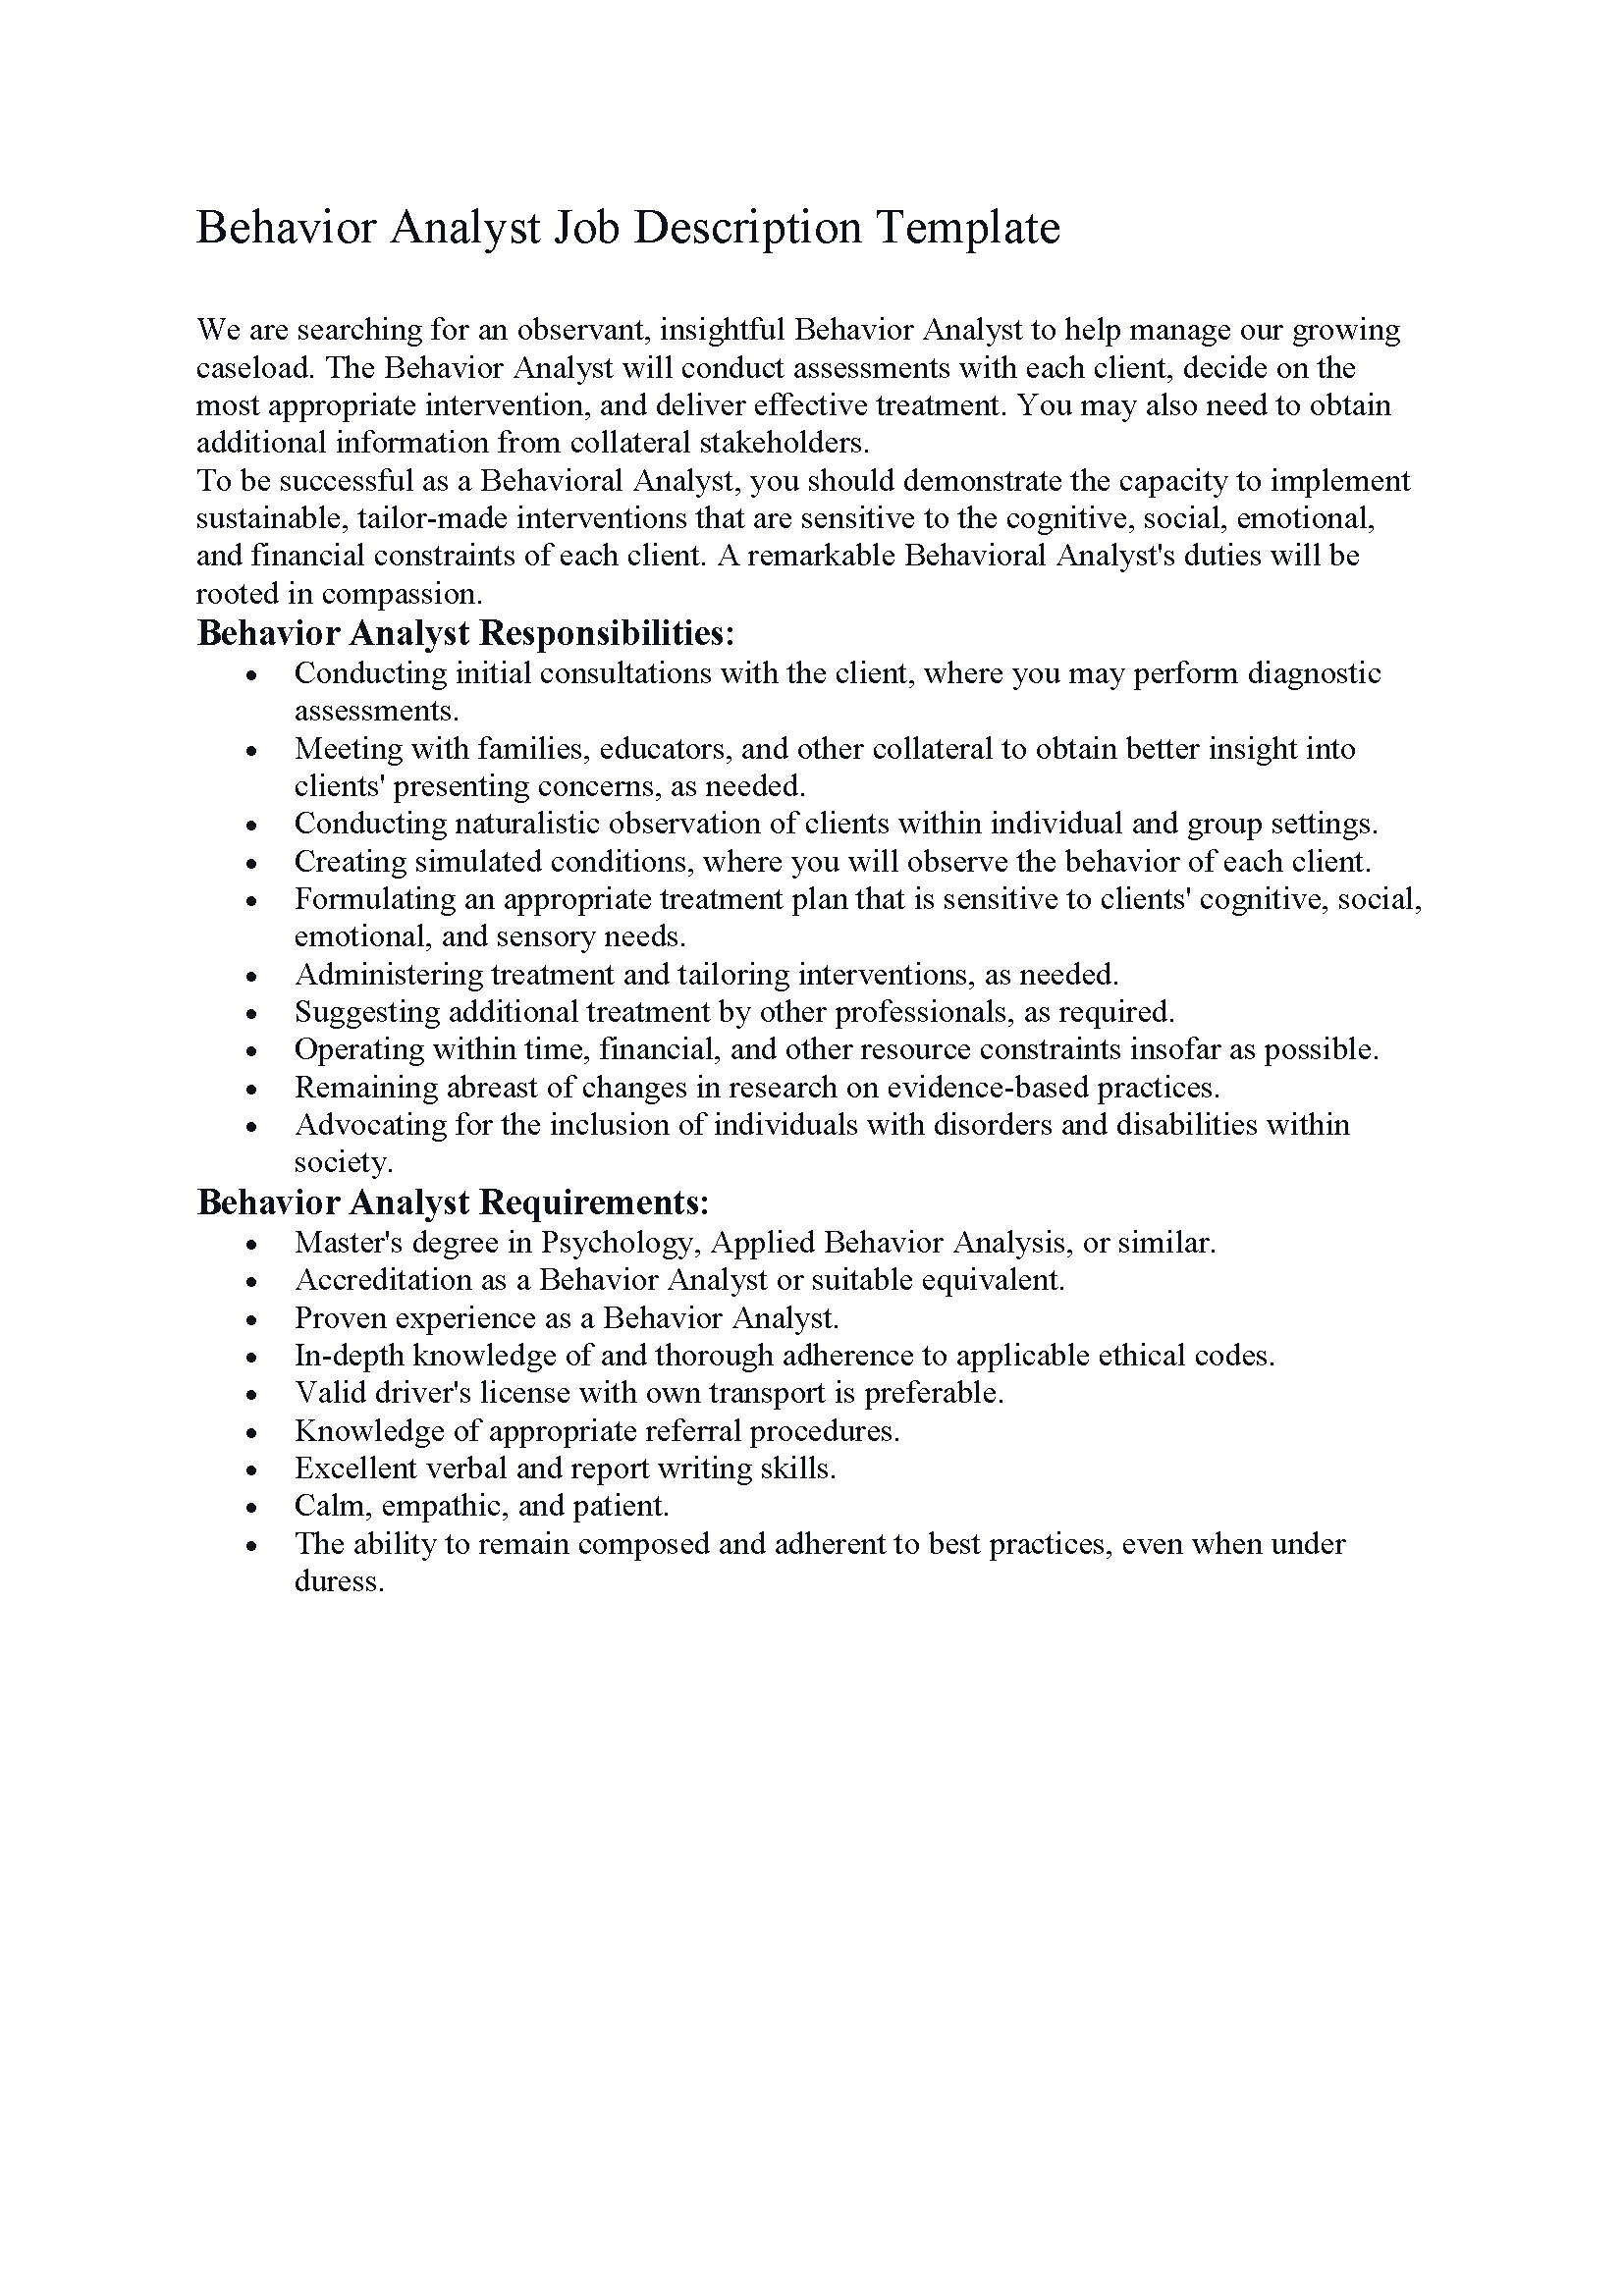 Behavior Analyst Job Description Template